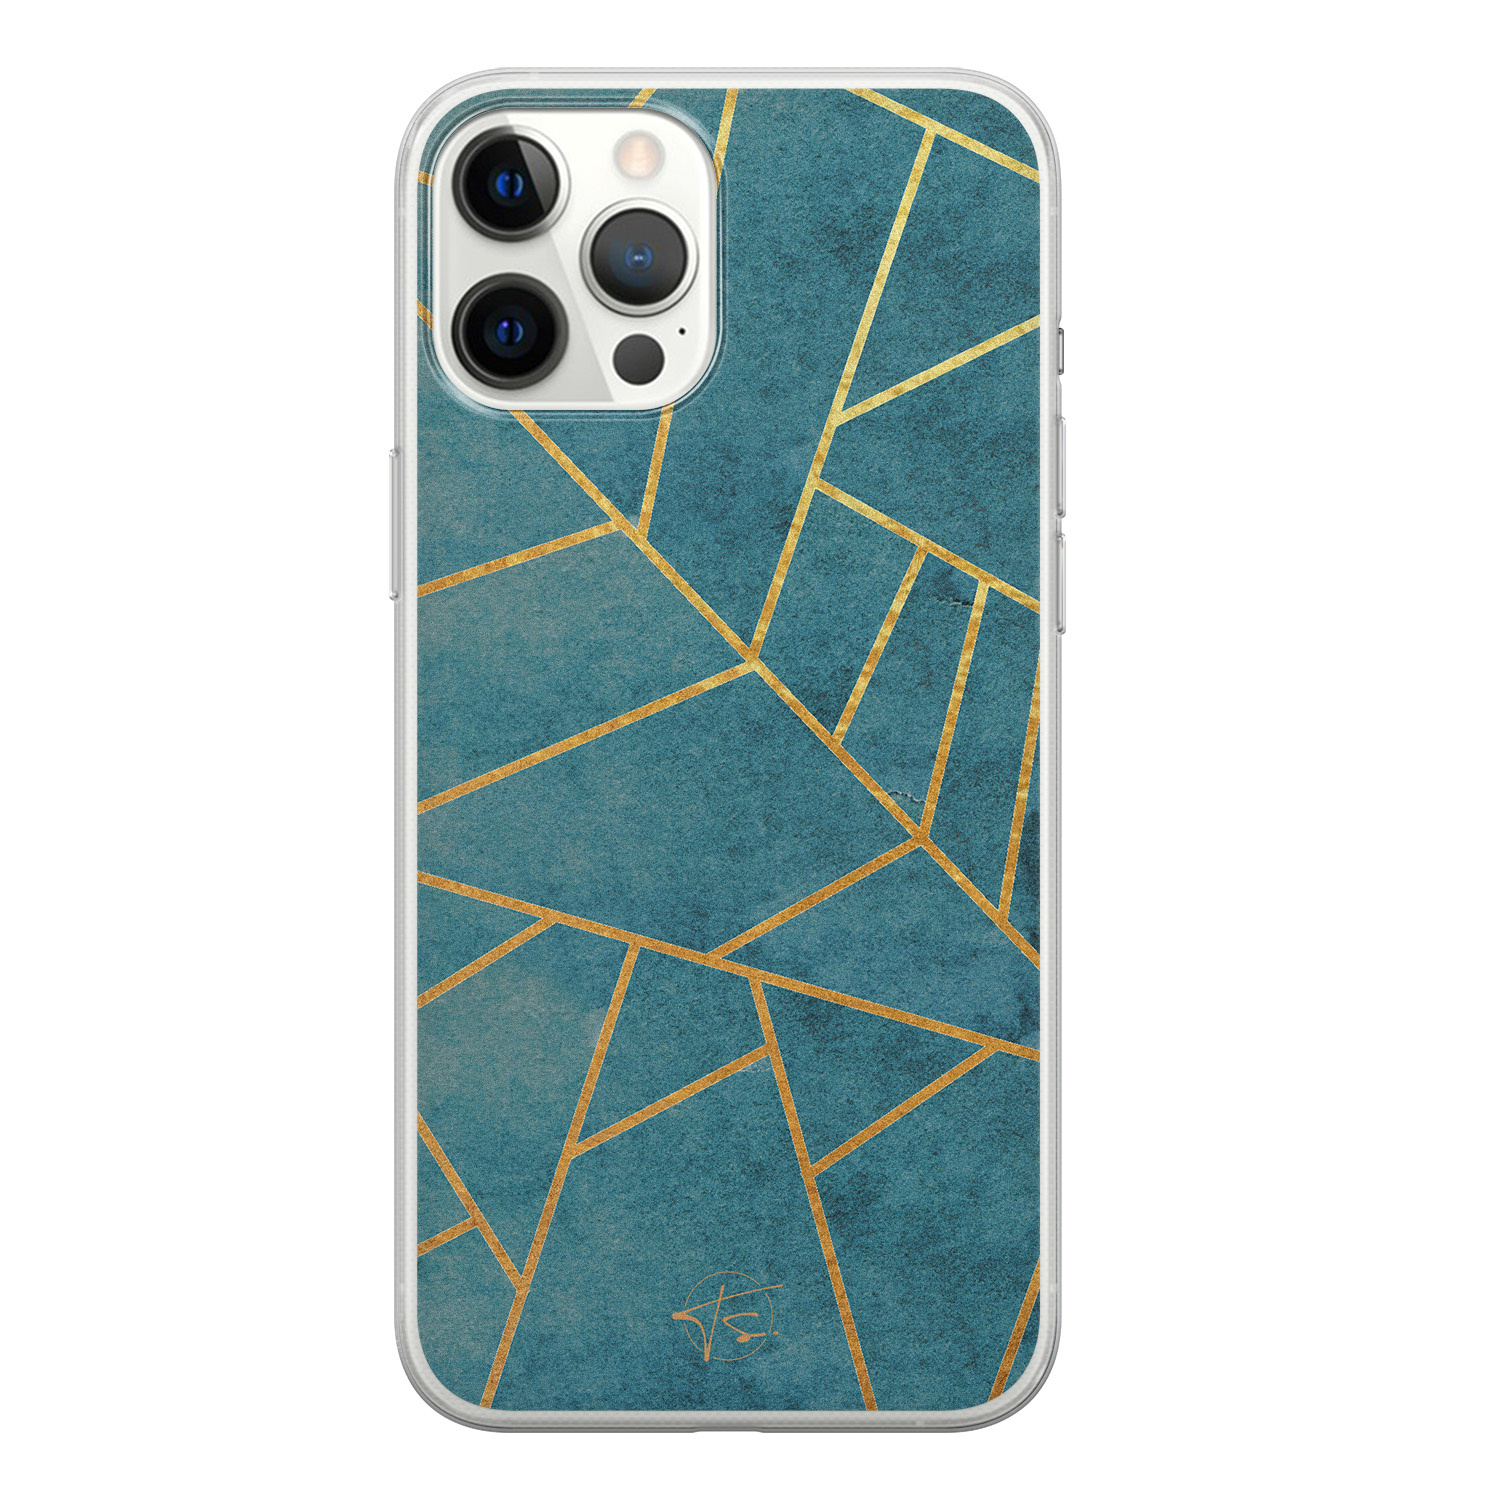 Telefoonhoesje Store iPhone 12 Pro Max siliconen hoesje - Abstract blauw